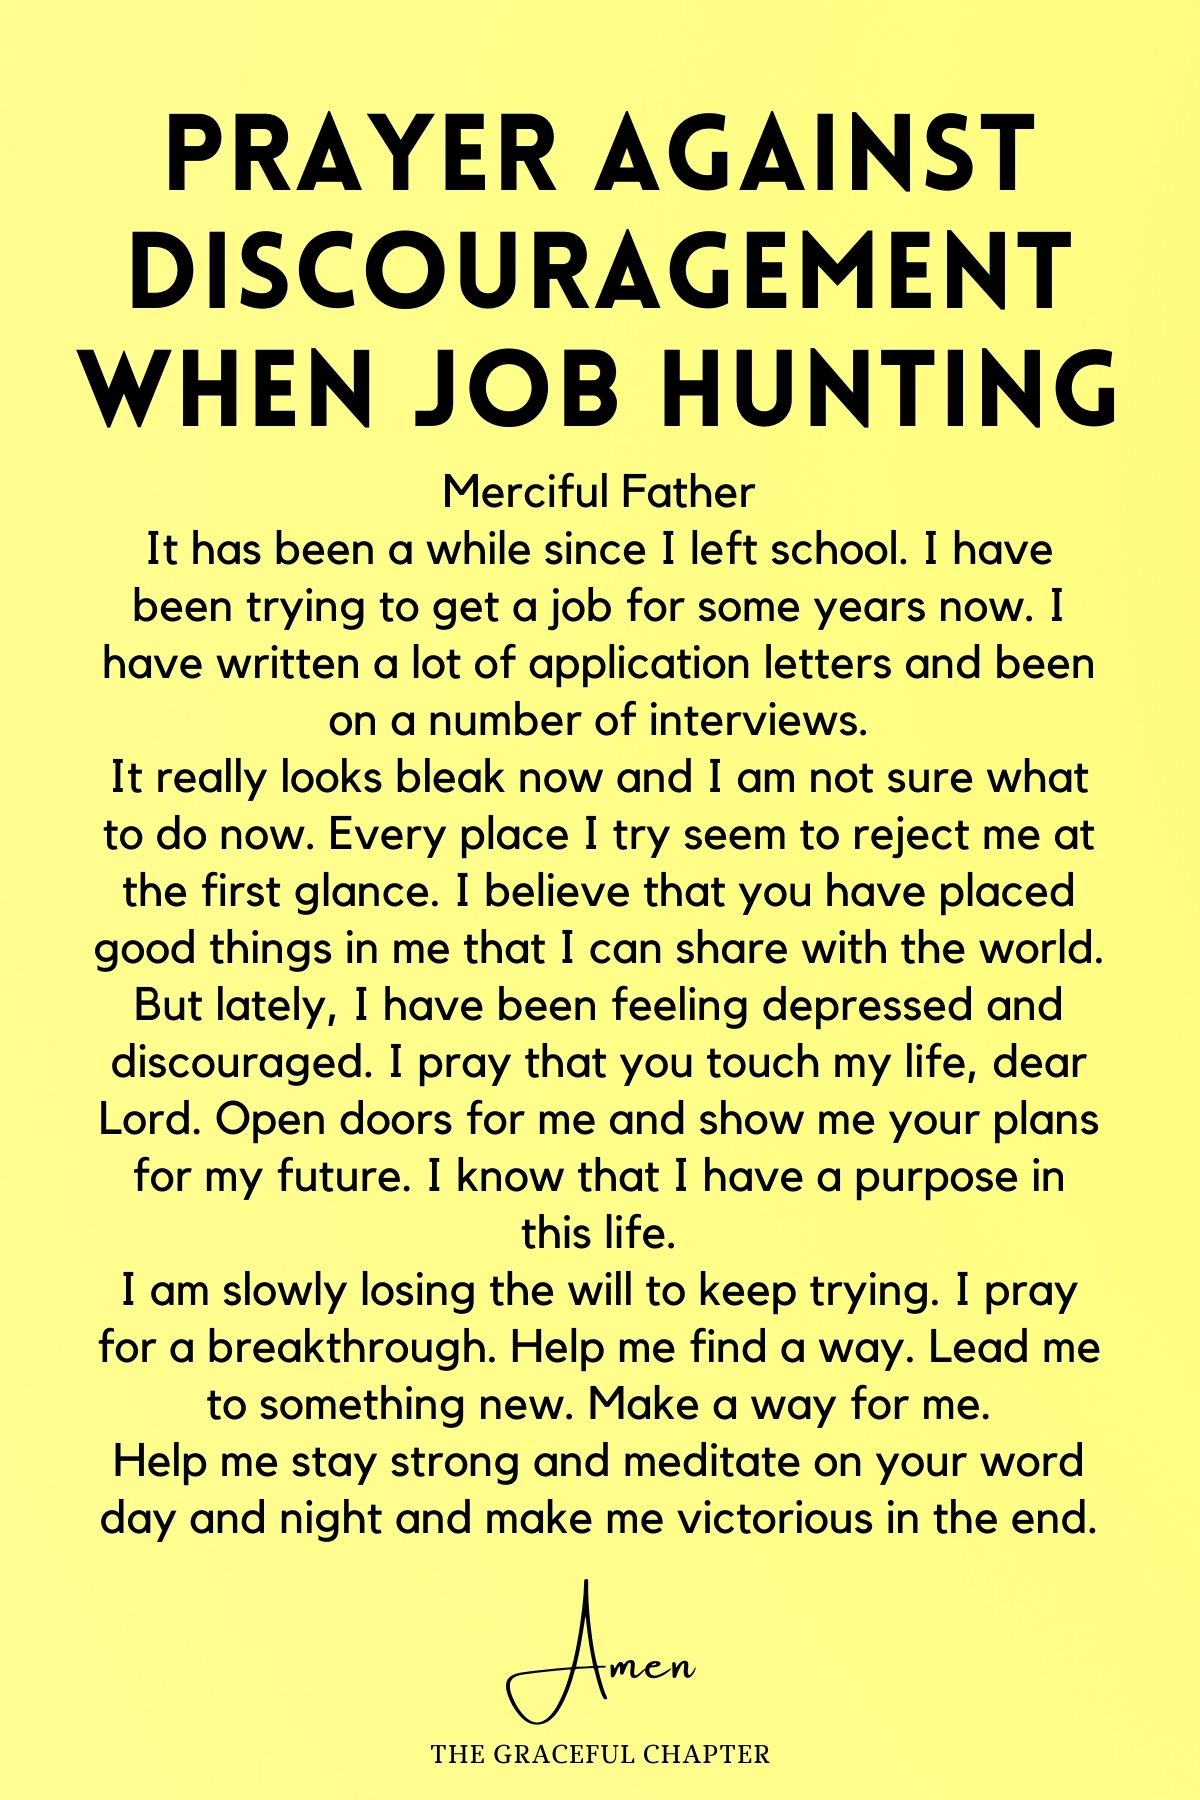 Prayers against discouragement when job hunting